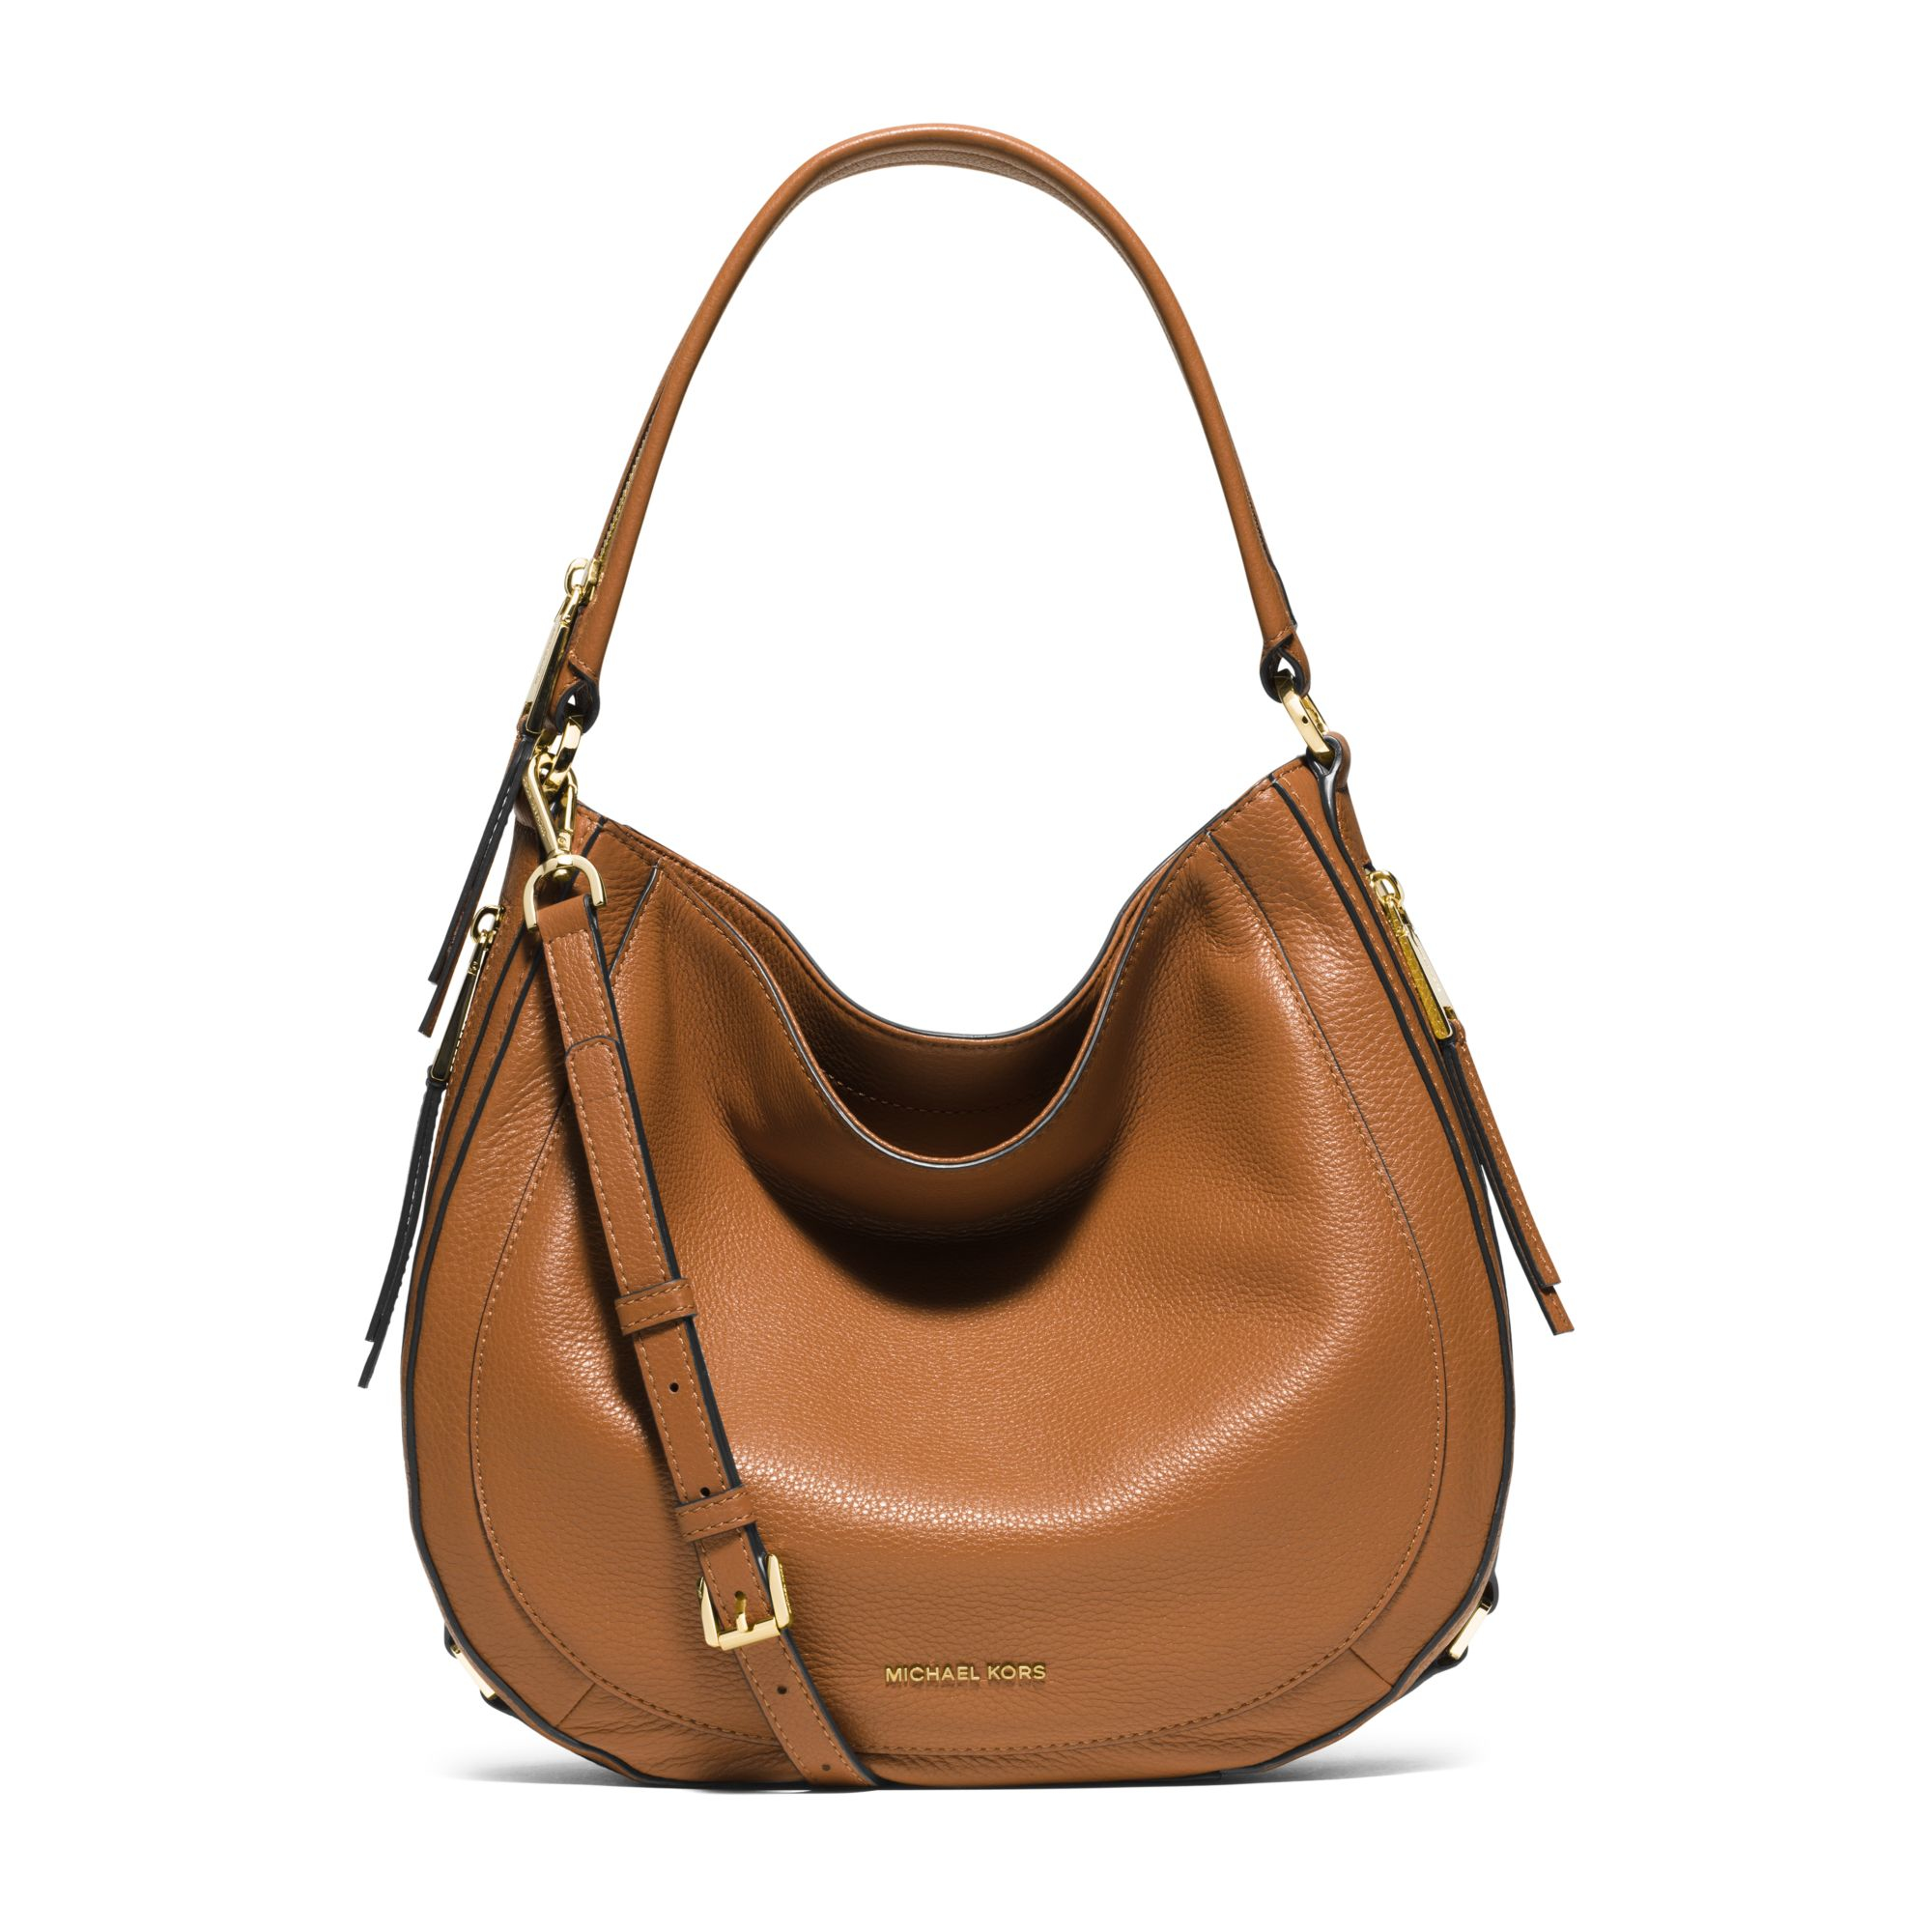 Lyst - Michael Kors Julia Medium Leather Shoulder Bag in Brown